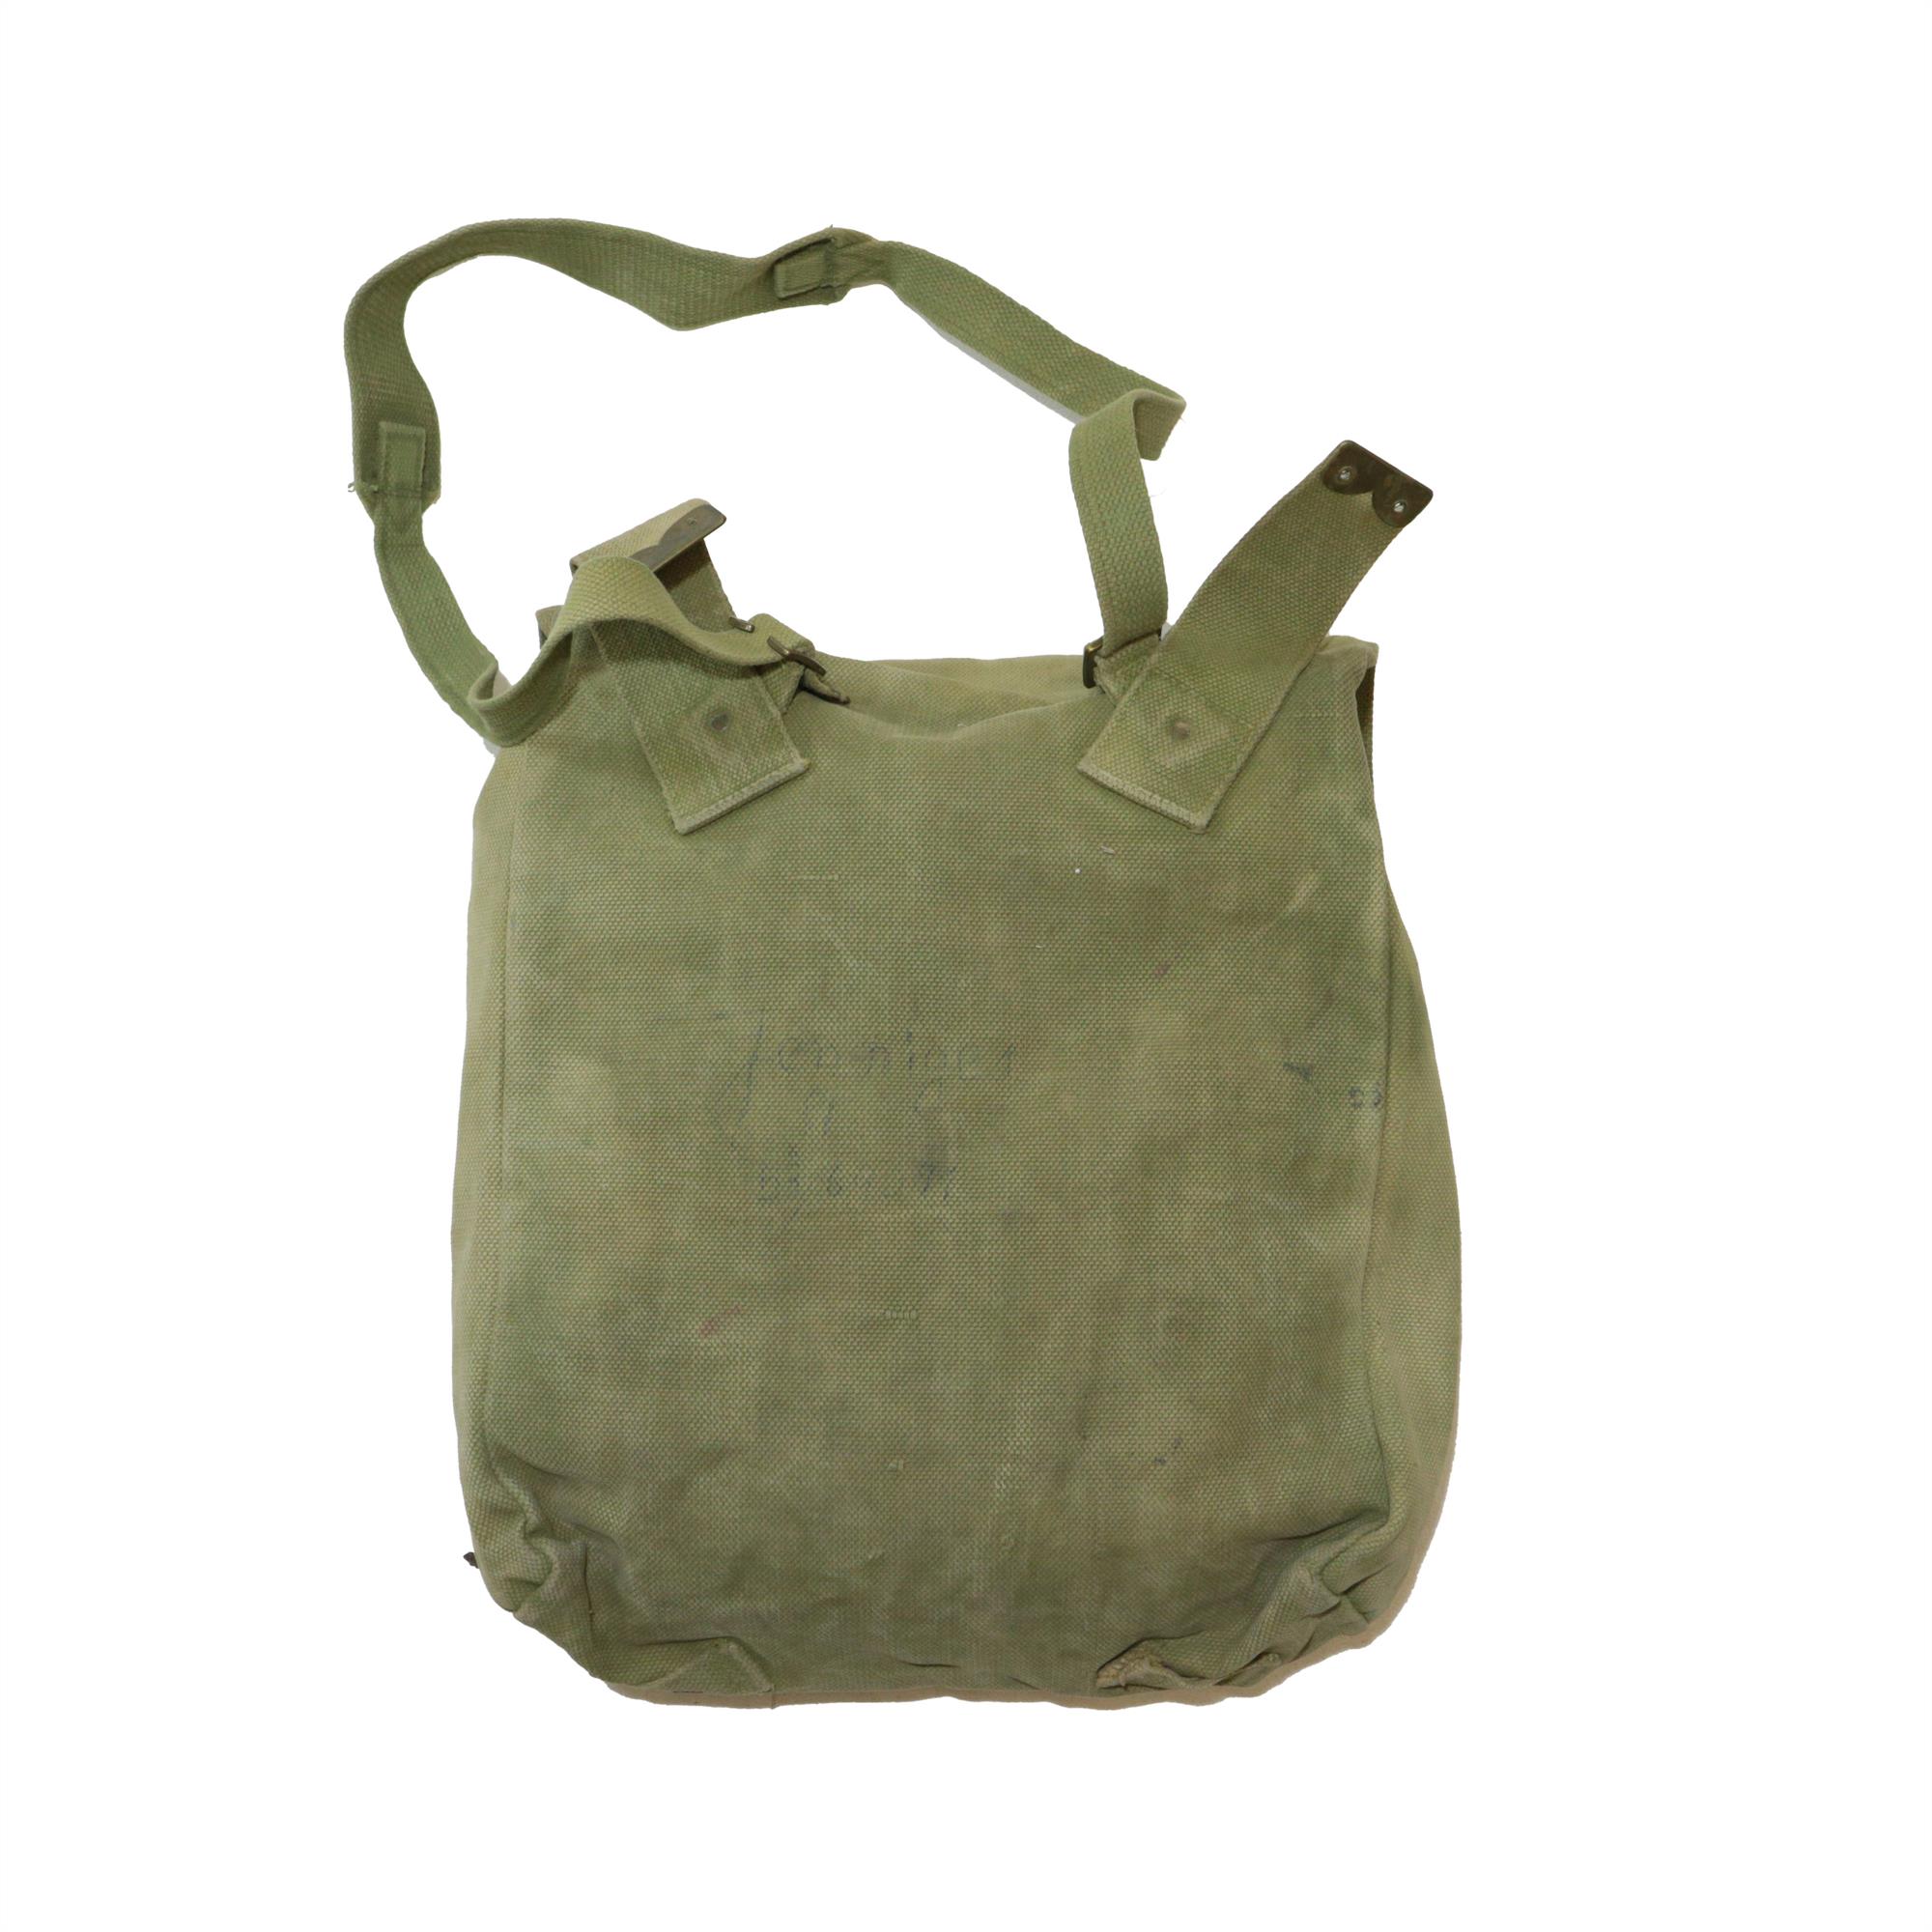 Genuine British Army M37 Haversack Shoulder Canvas Bag with Strap ...